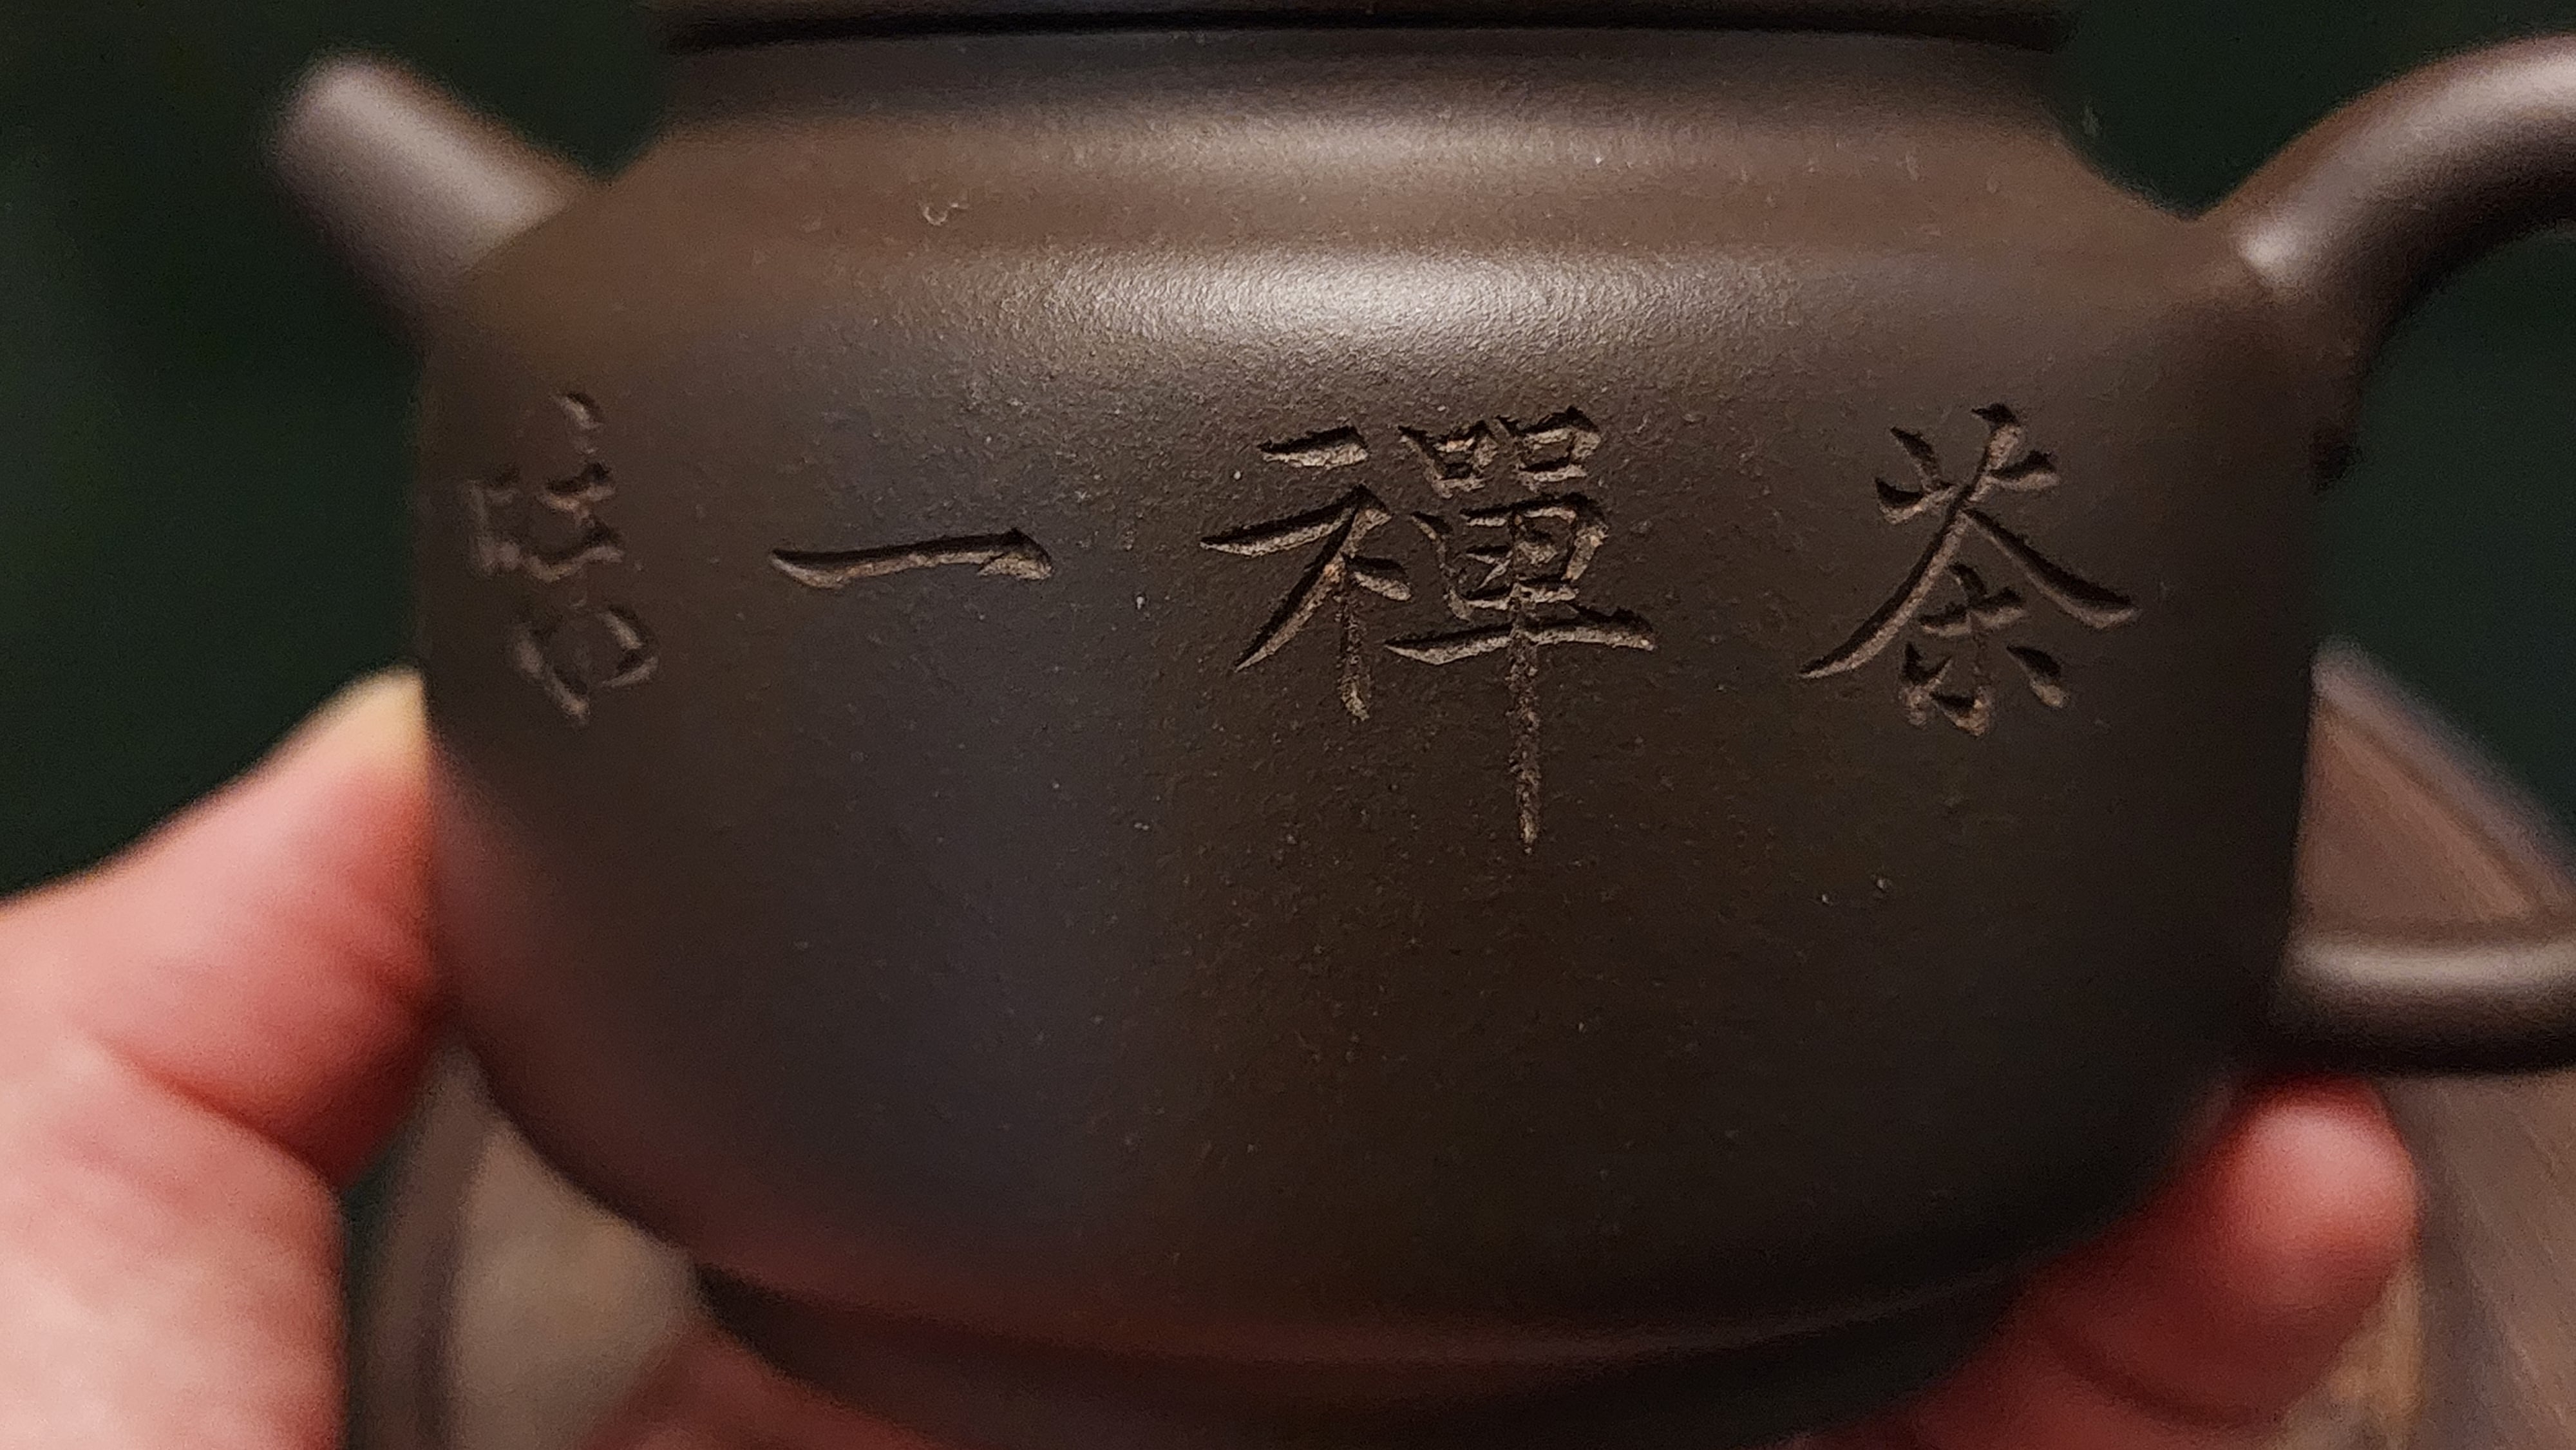 Ming Xiang 茗香, Clay (extinct): Wu Ni 乌泥 from Grand Master Han Qi Lou 韩其楼, Engraving Art by Master Wang Chao Peng 王超鹏, Pot crafted by Master Lu Shun Rong 陆顺荣。